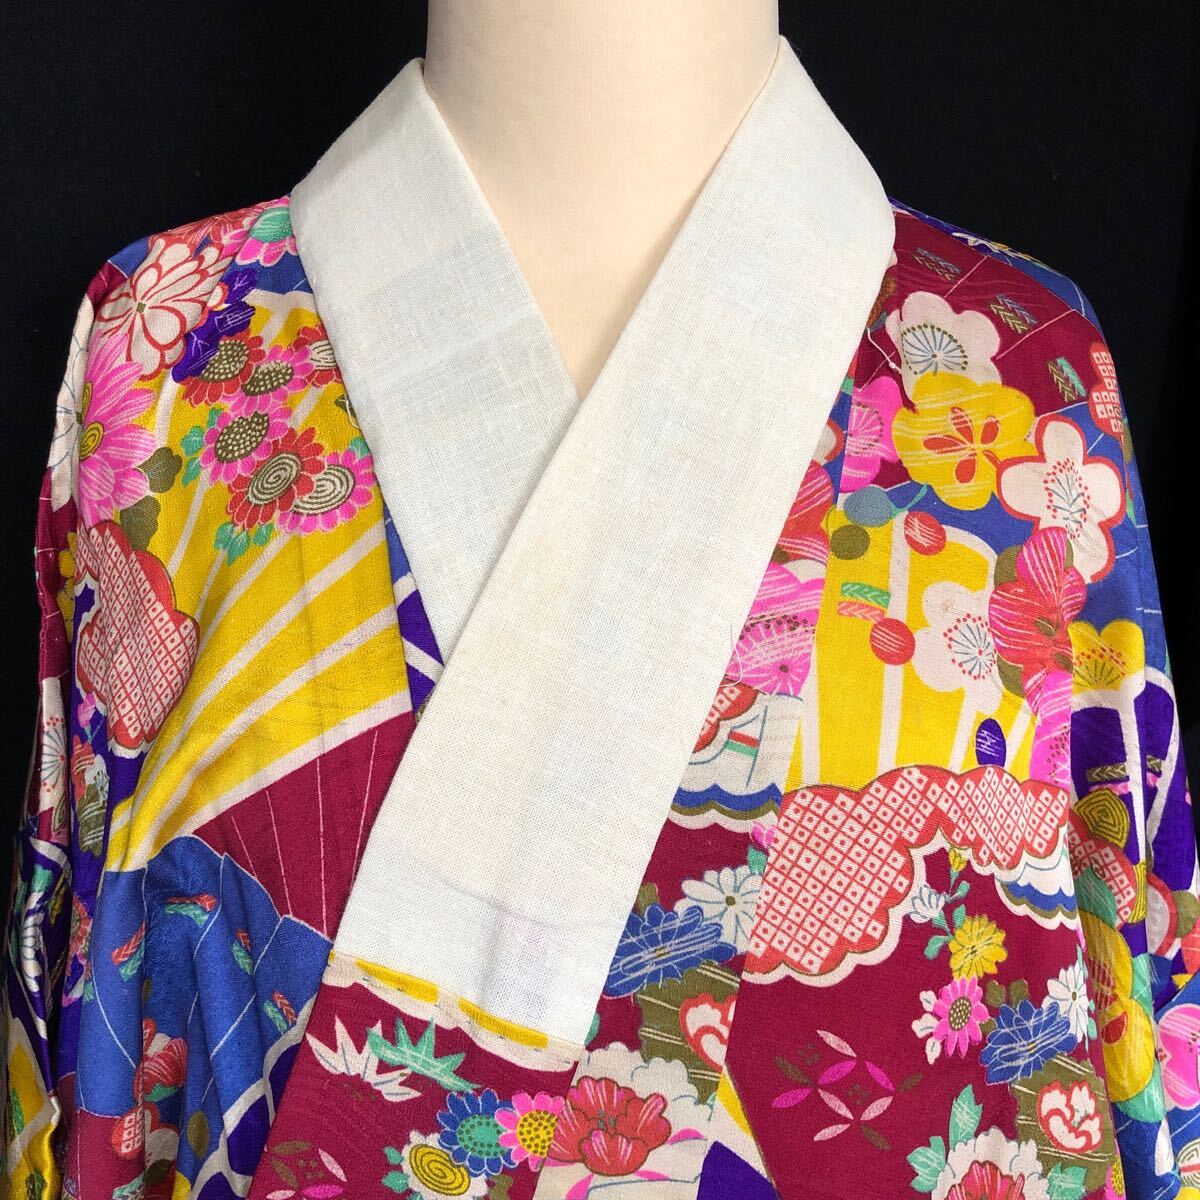  длинное нижнее кимоно античный кимоно Showa Retro Taisho роман современный мир ...ko-te переделка Moss Lynn шелк .16-12w